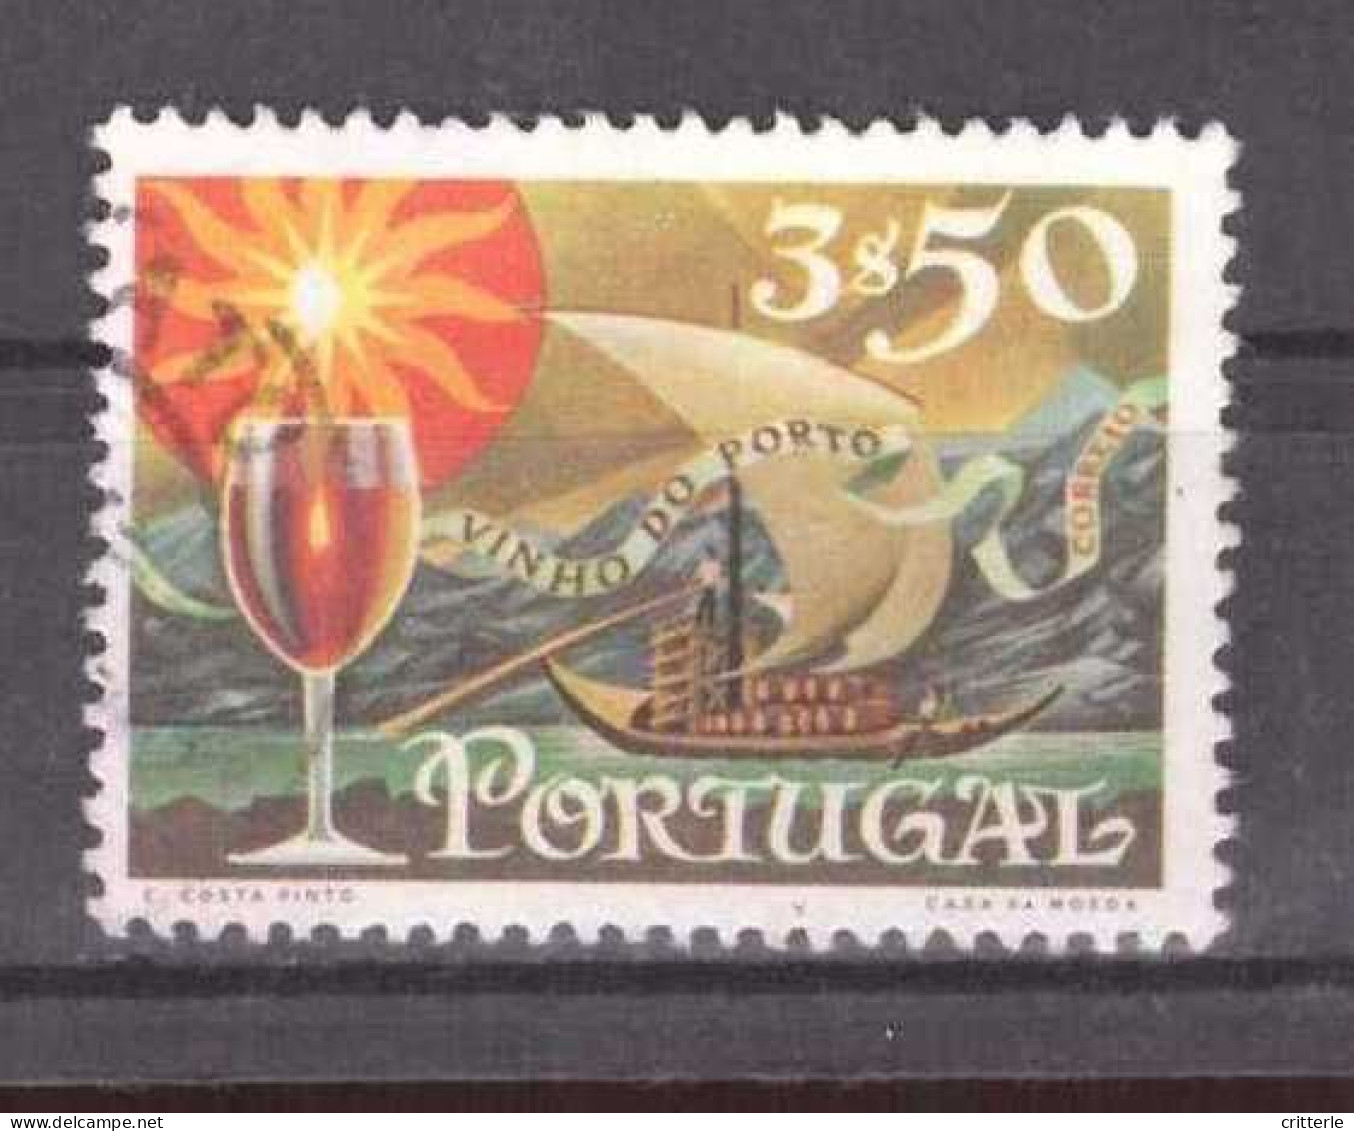 Portugal Michel Nr. 1119 Gestempelt (7) - Used Stamps